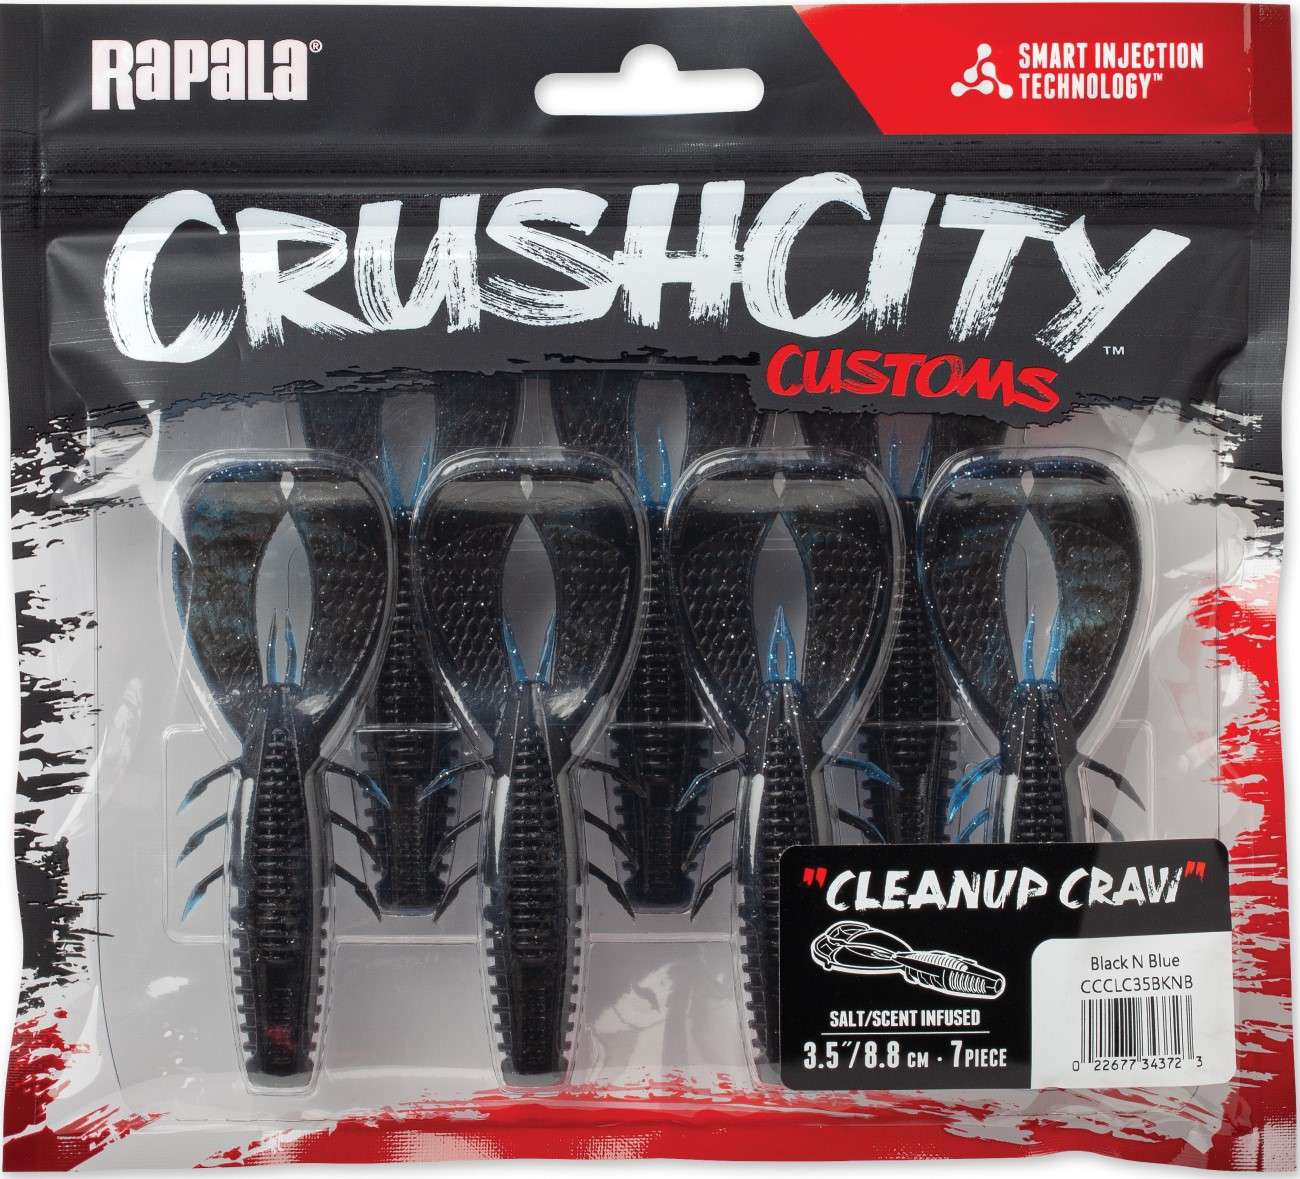 Crush City Cleanup Craw Black N Blue